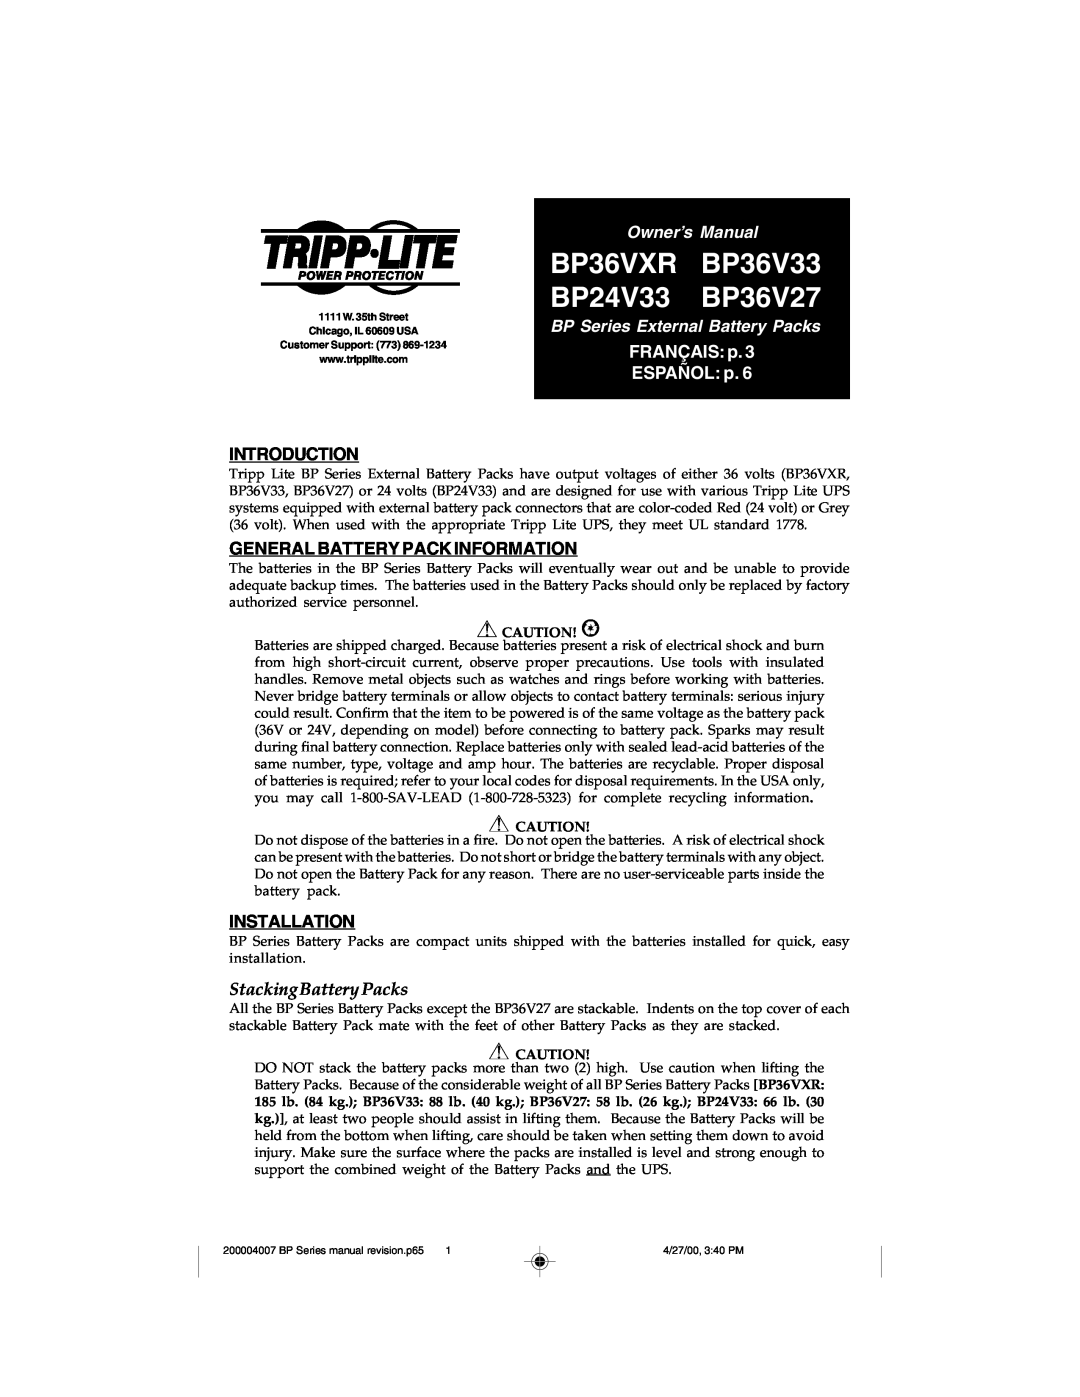 Tripp Lite BP36V33 owner manual Introduction, General Battery Pack Information, Installation, Stacking Battery Packs 